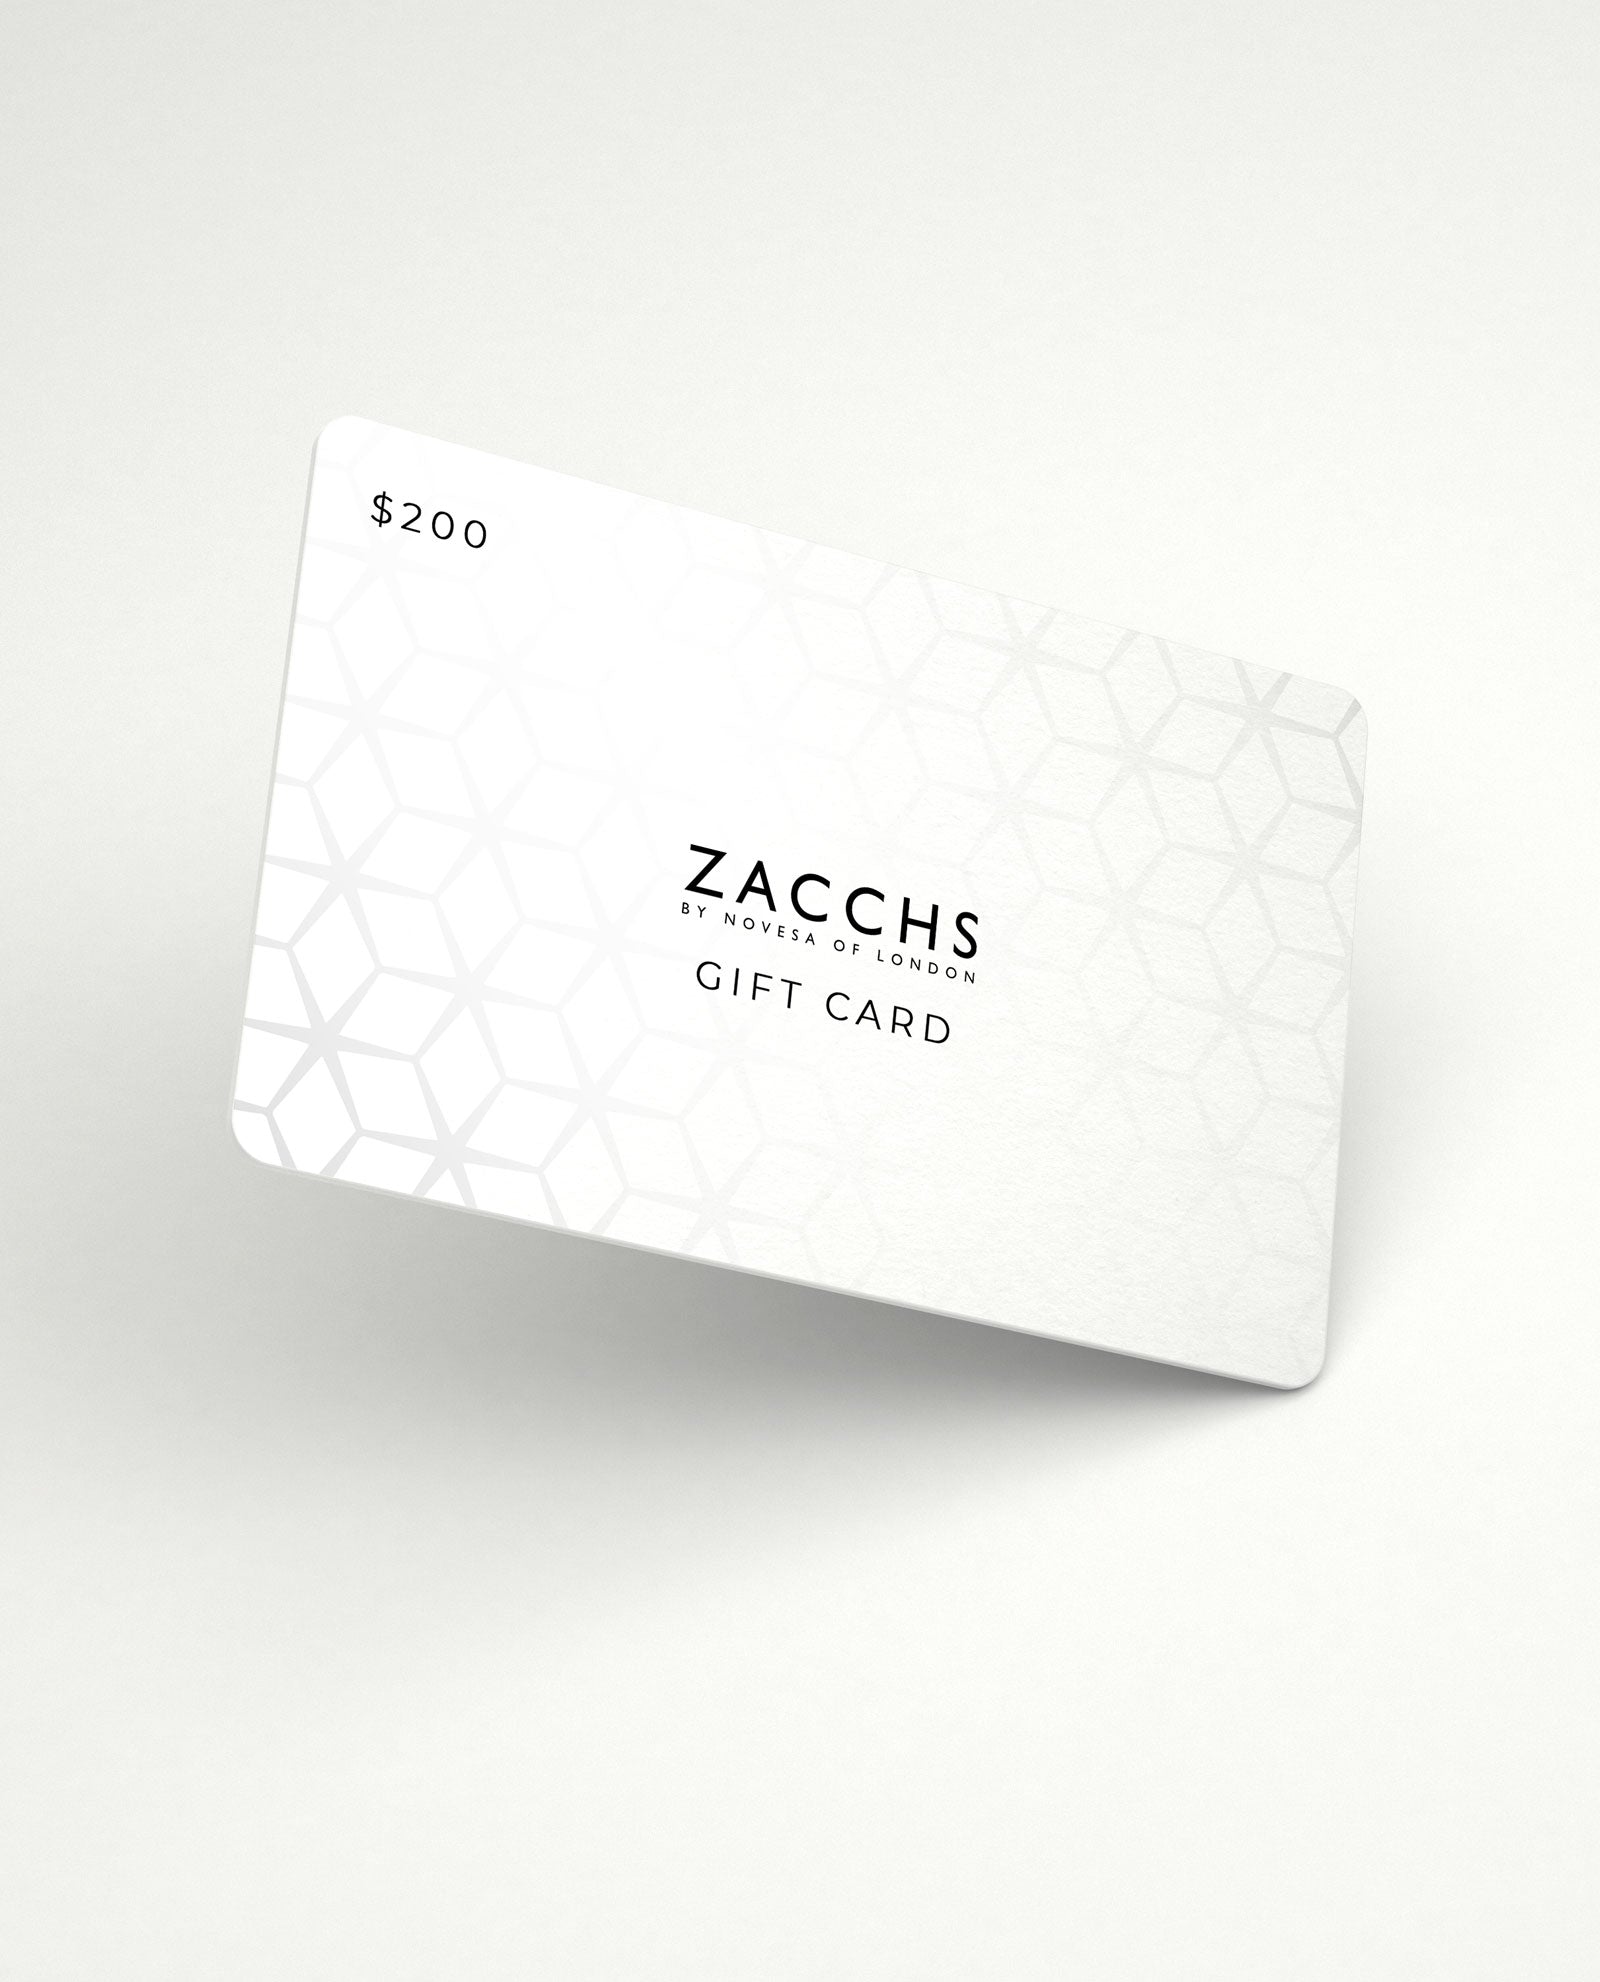 Zacchs Gift Card